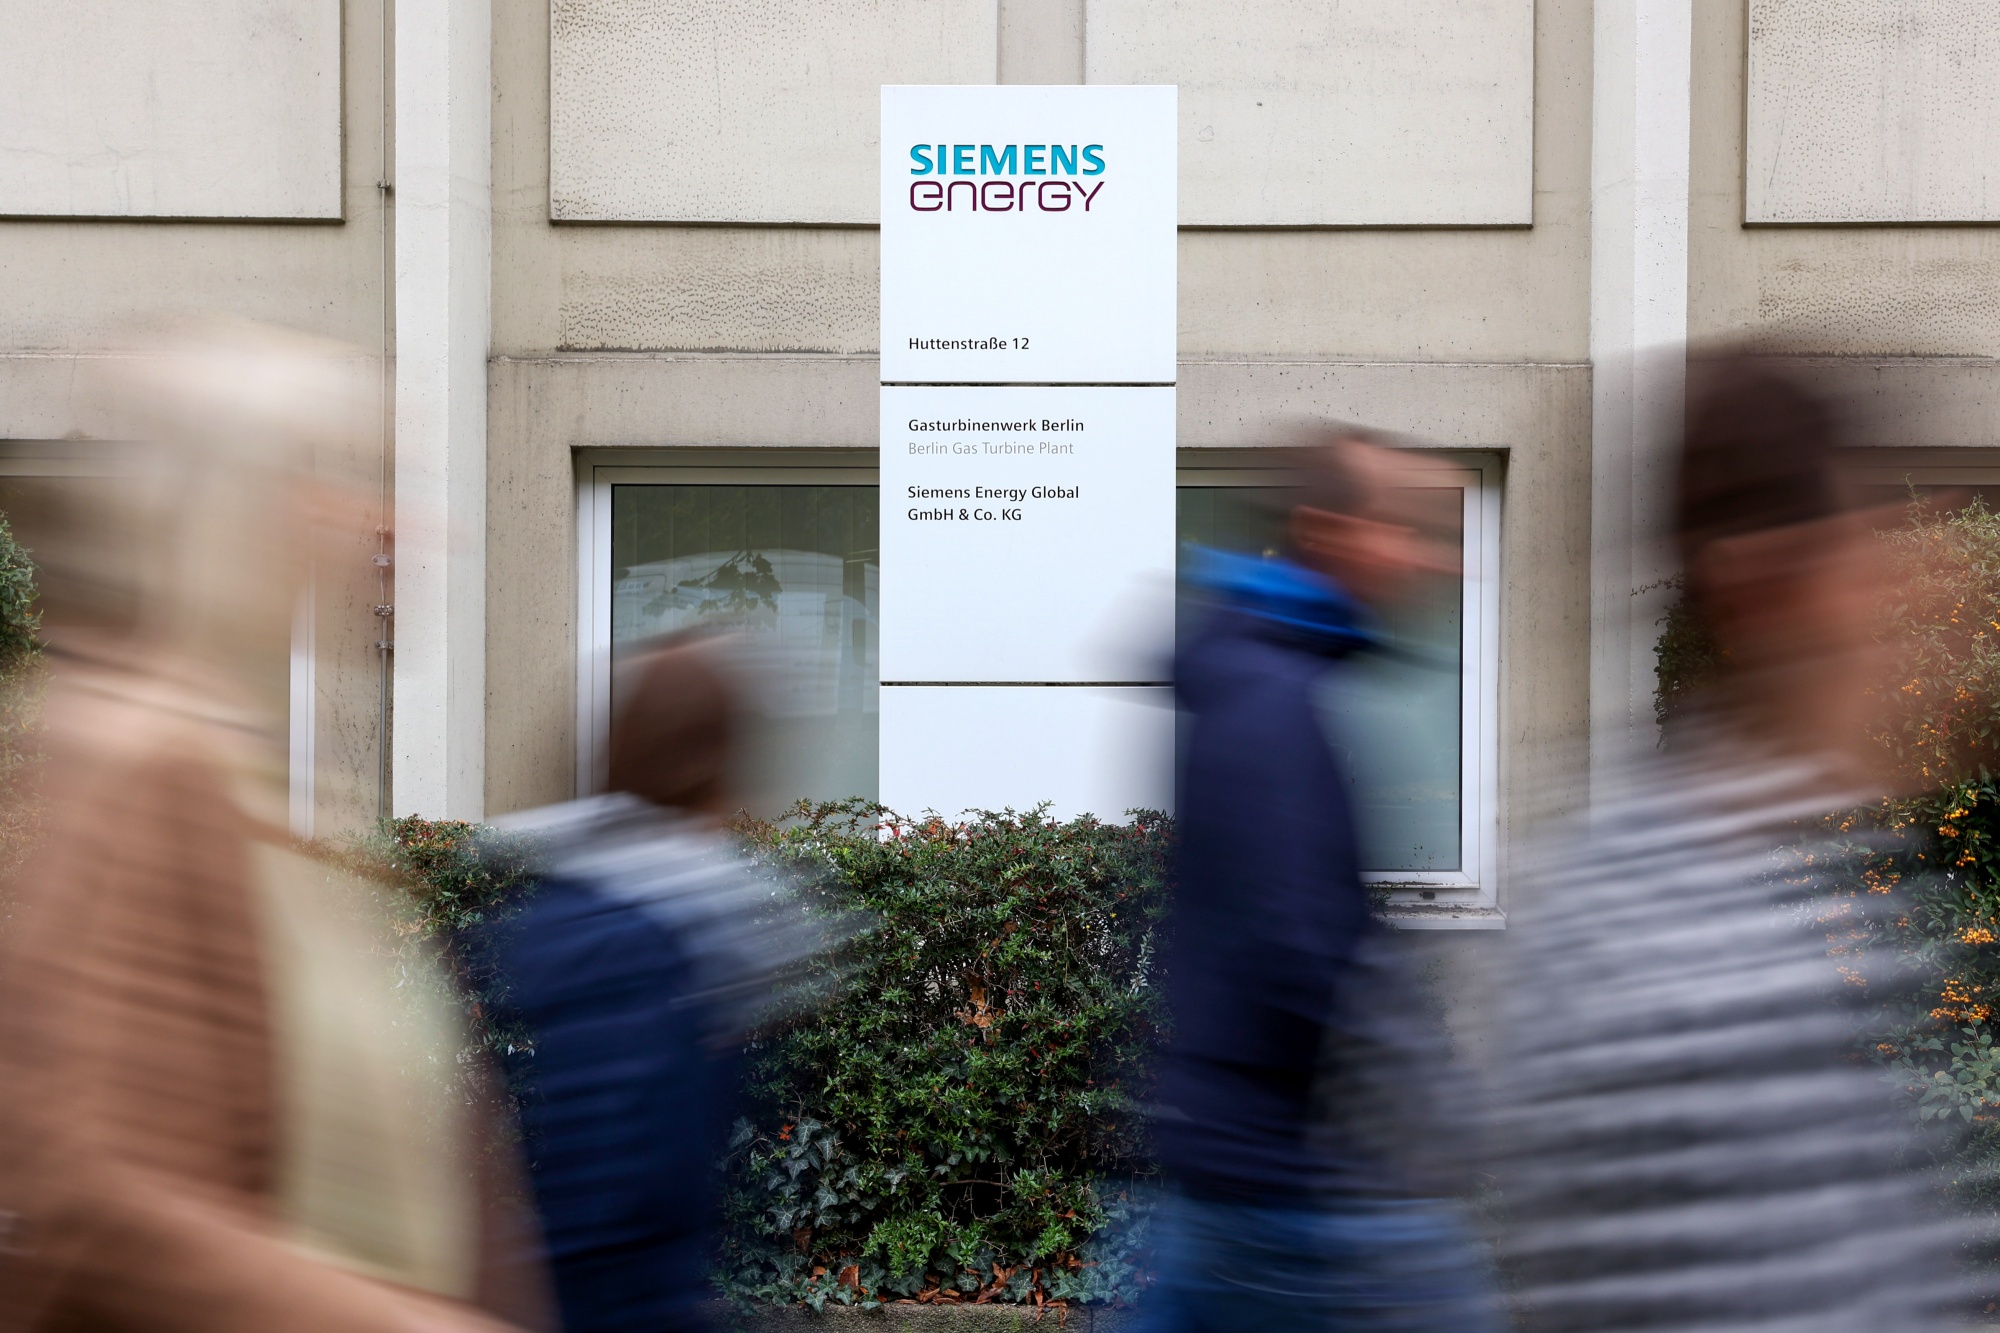 Siemens Energy Secures Provisional Guarantees Deal, Reuters Says